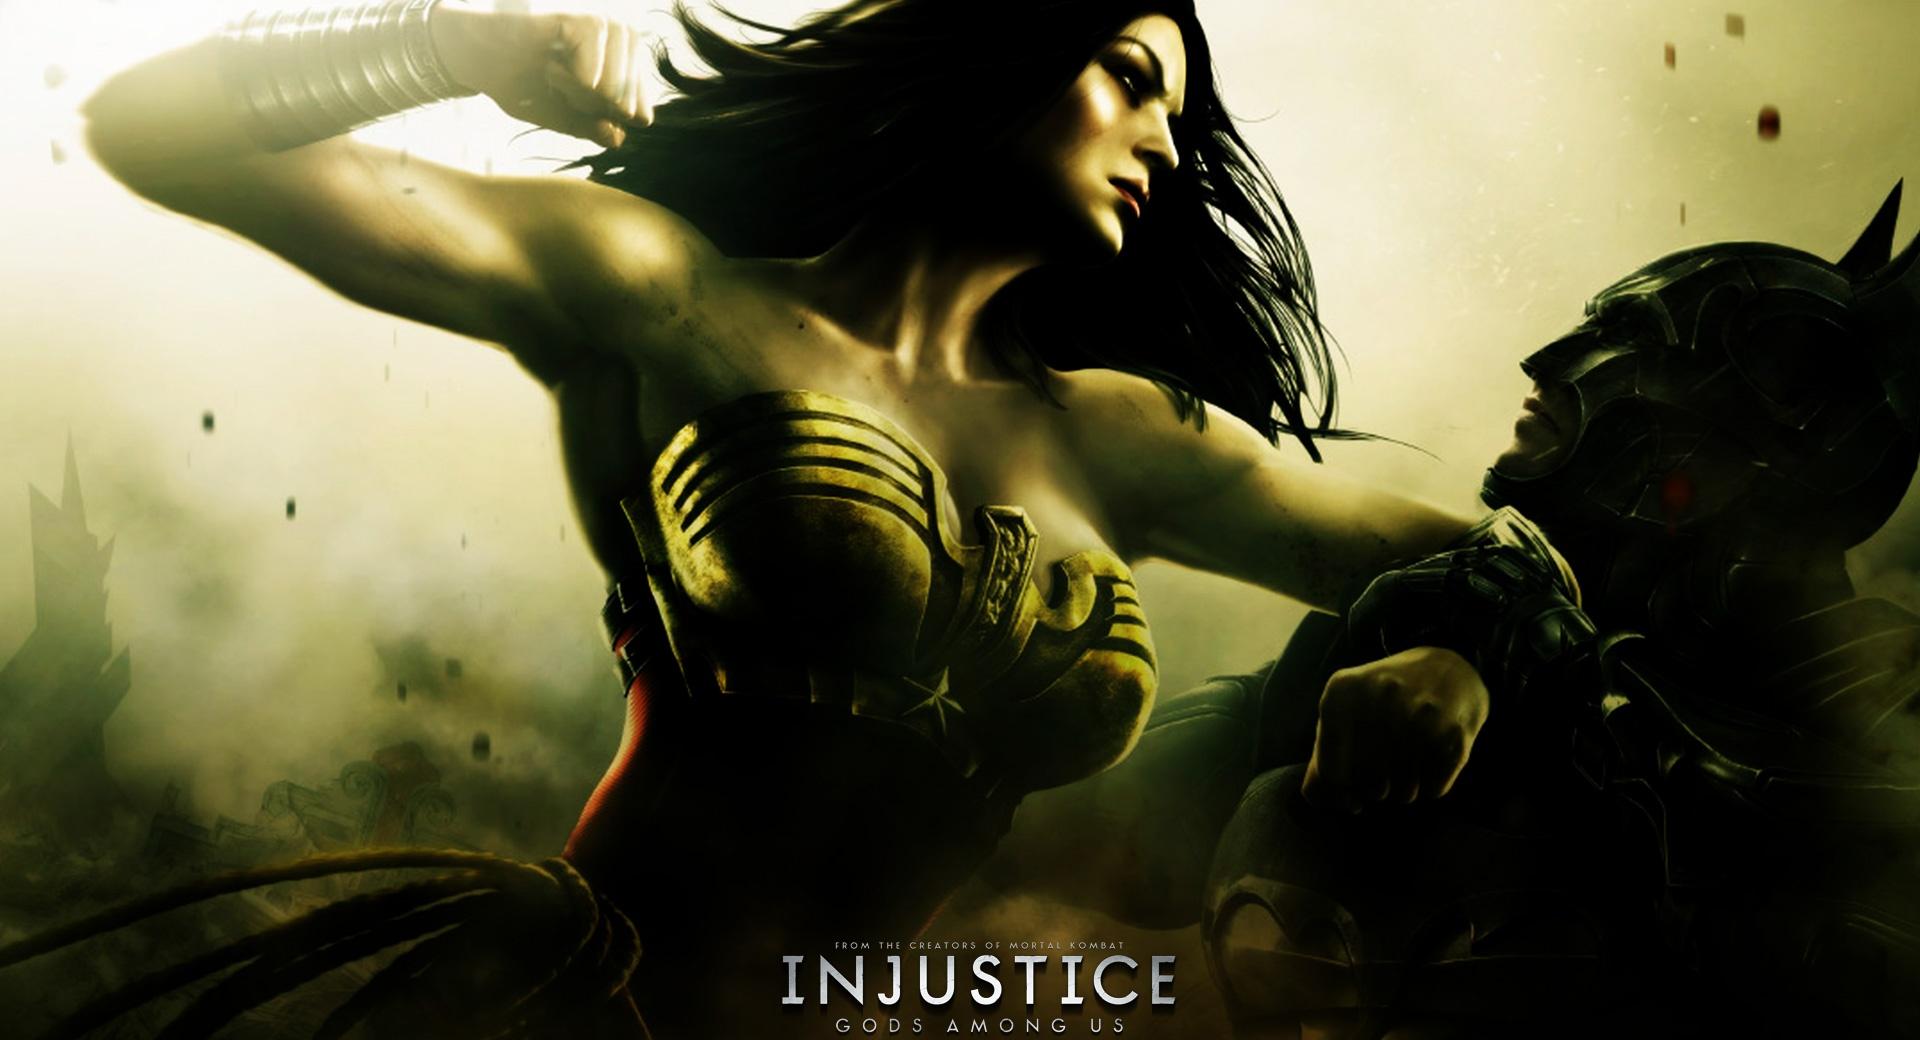 Injustice Gods Among Us - Batman vs Wonder Woman at 1024 x 768 size wallpapers HD quality